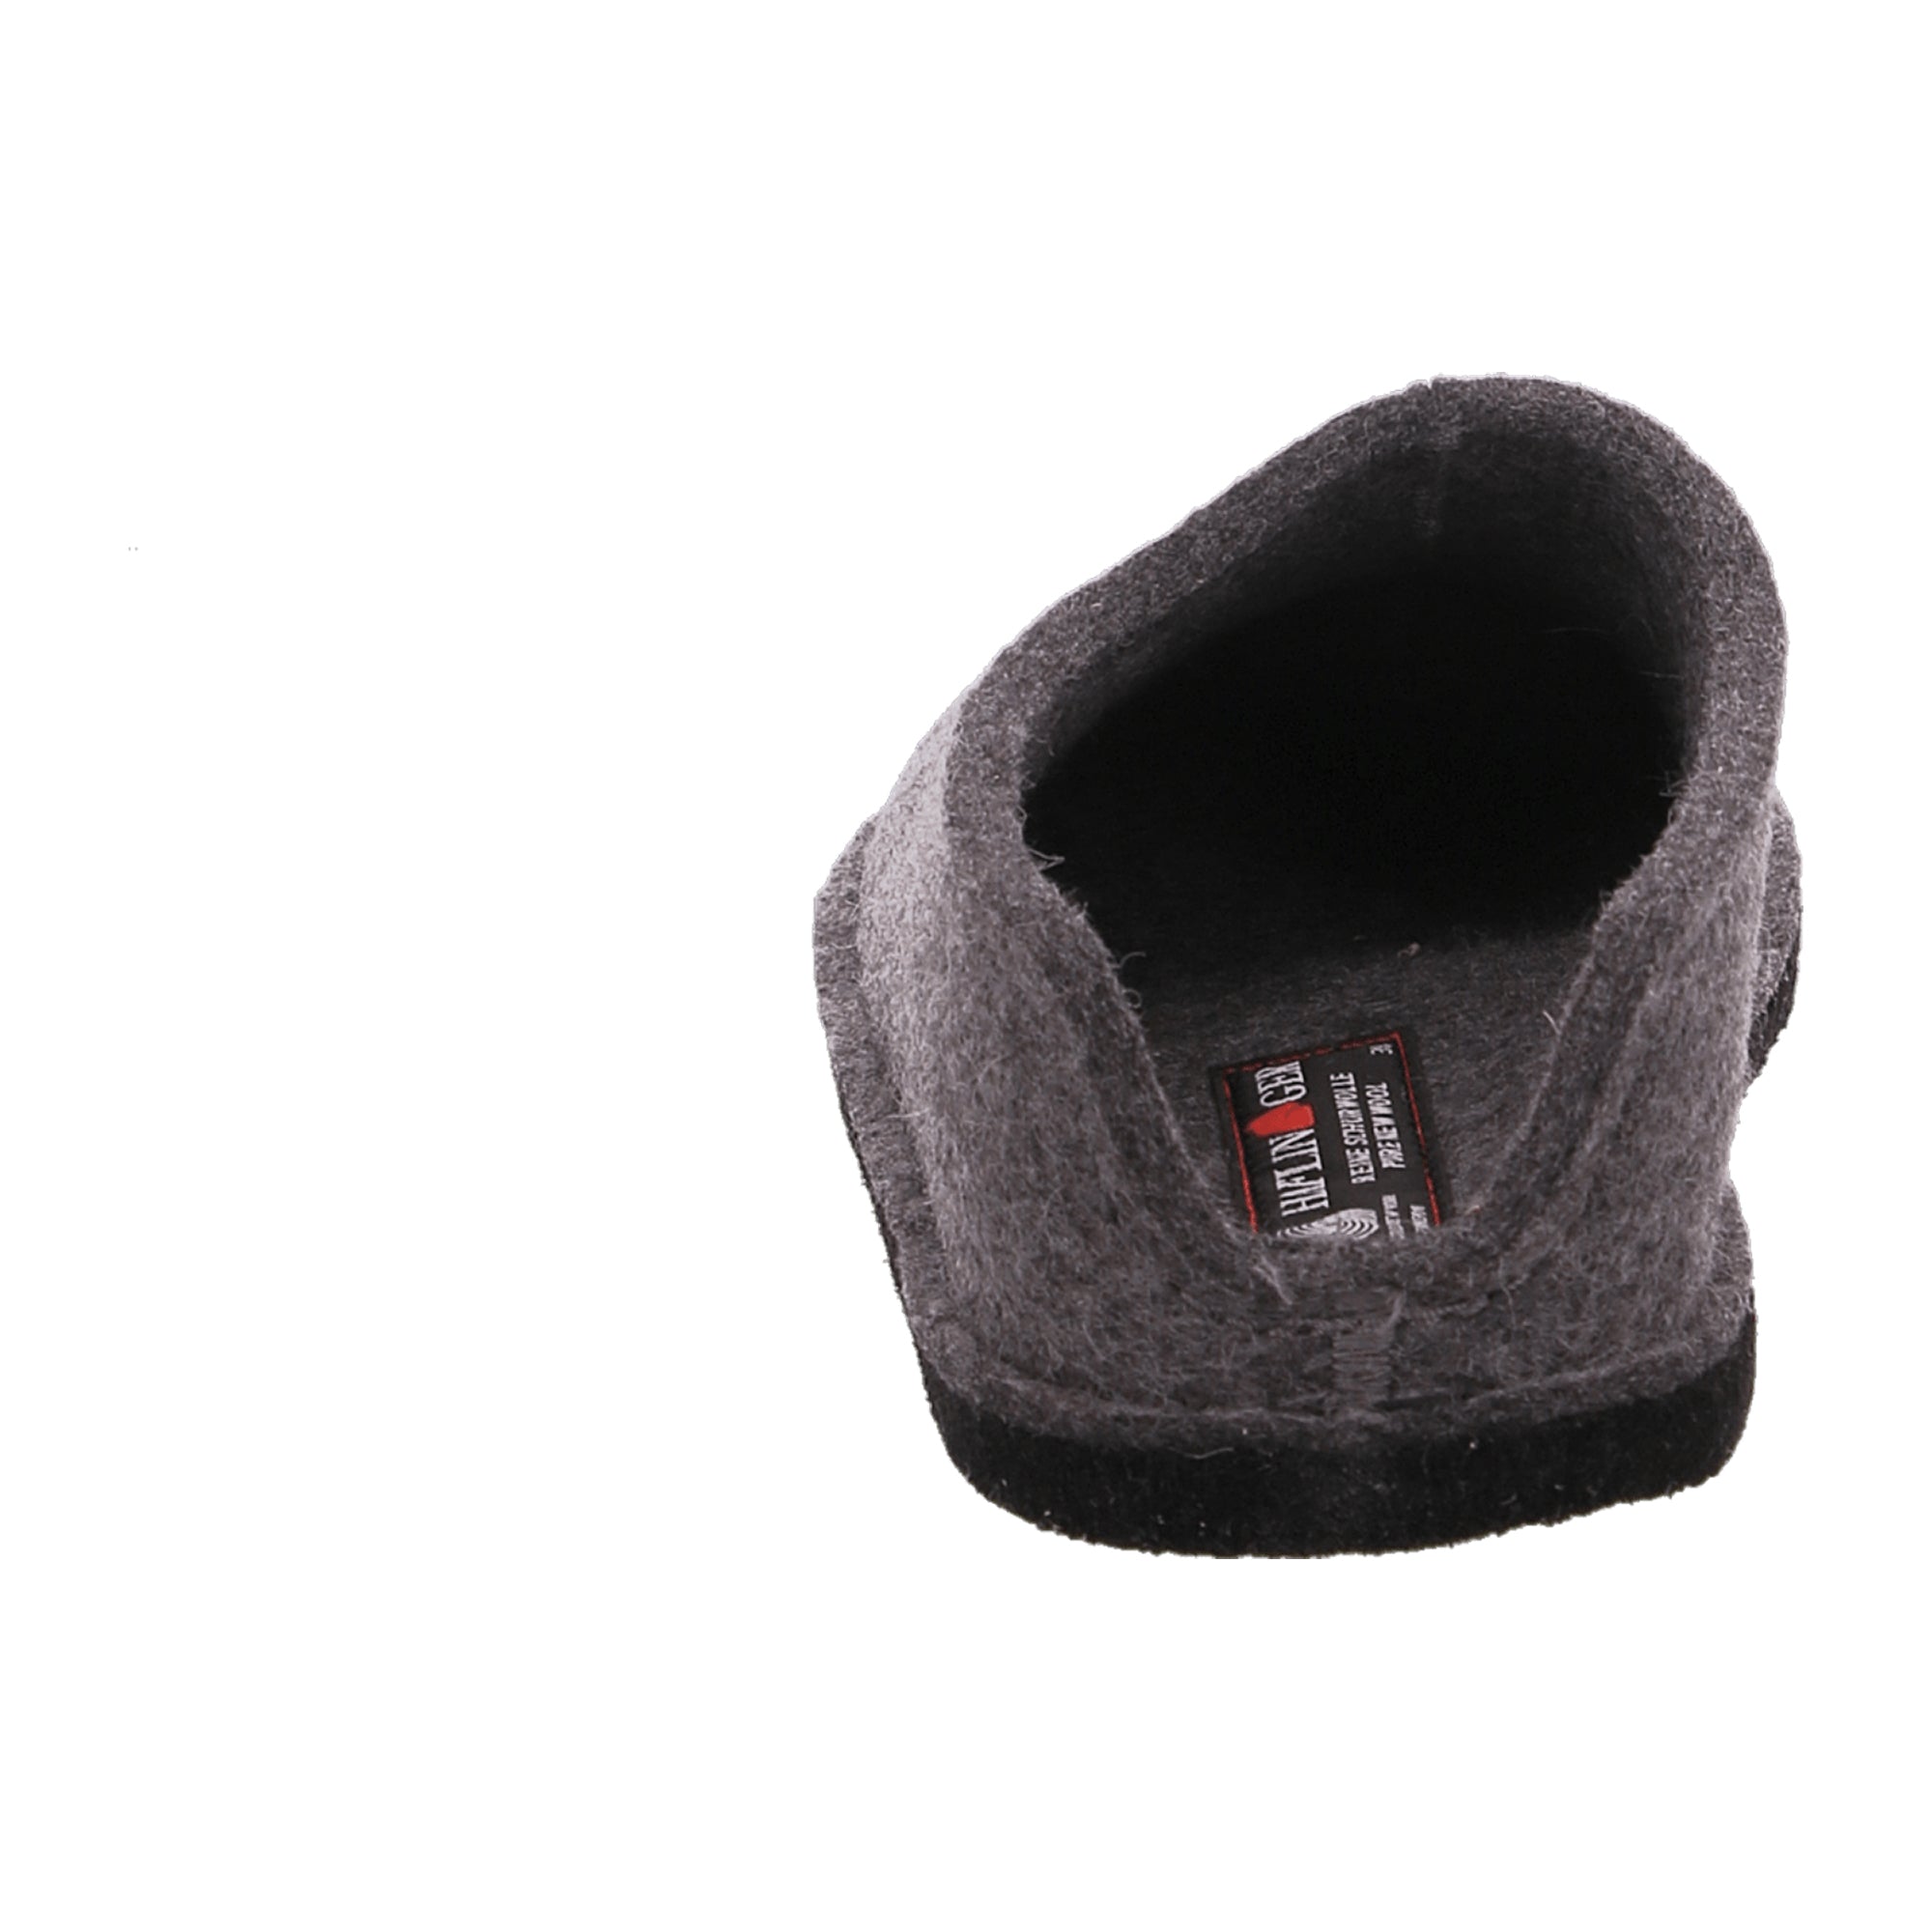 Haflinger Flair Smily Men's Slippers - Stylish Grey Wool Comfort